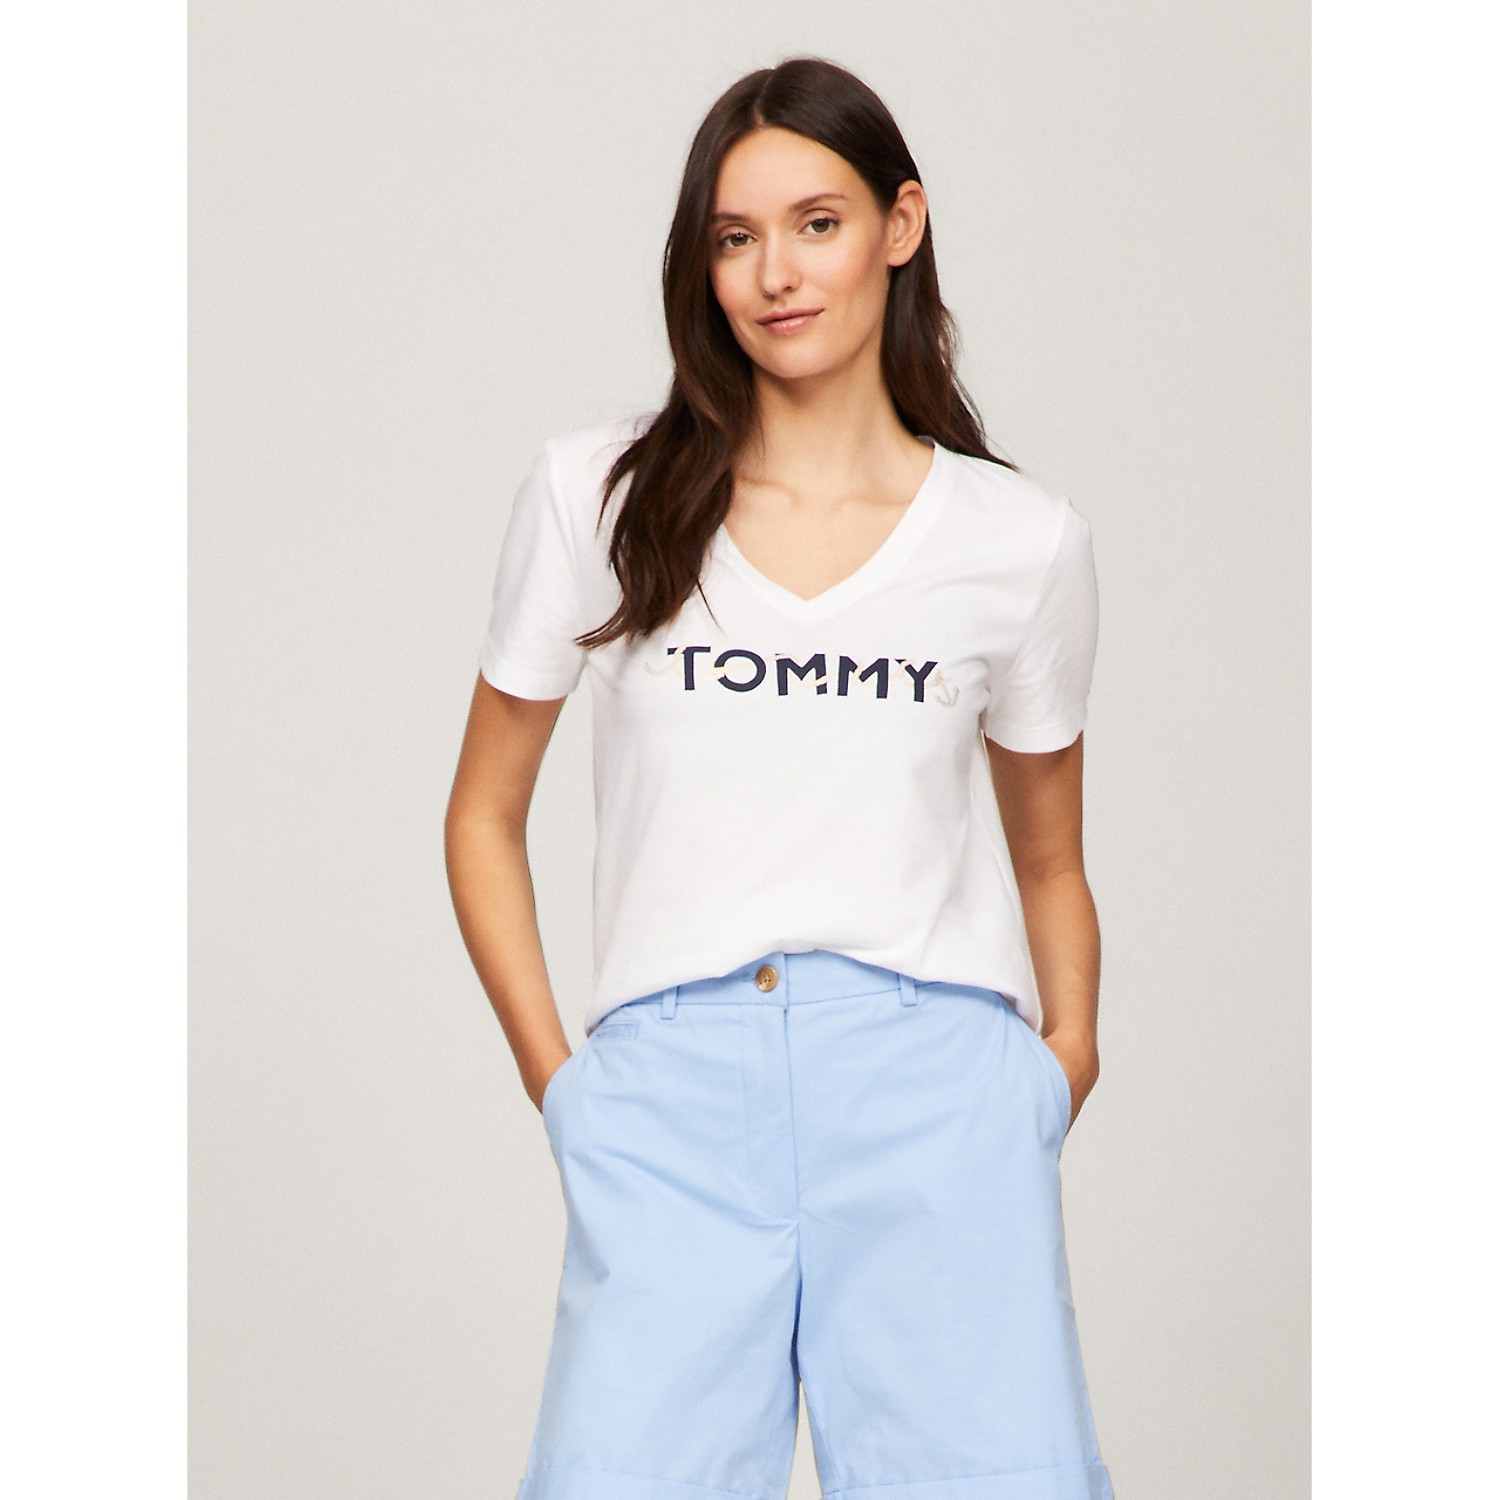 TOMMY HILFIGER Tommy Anchor Logo V-Neck T-Shirt